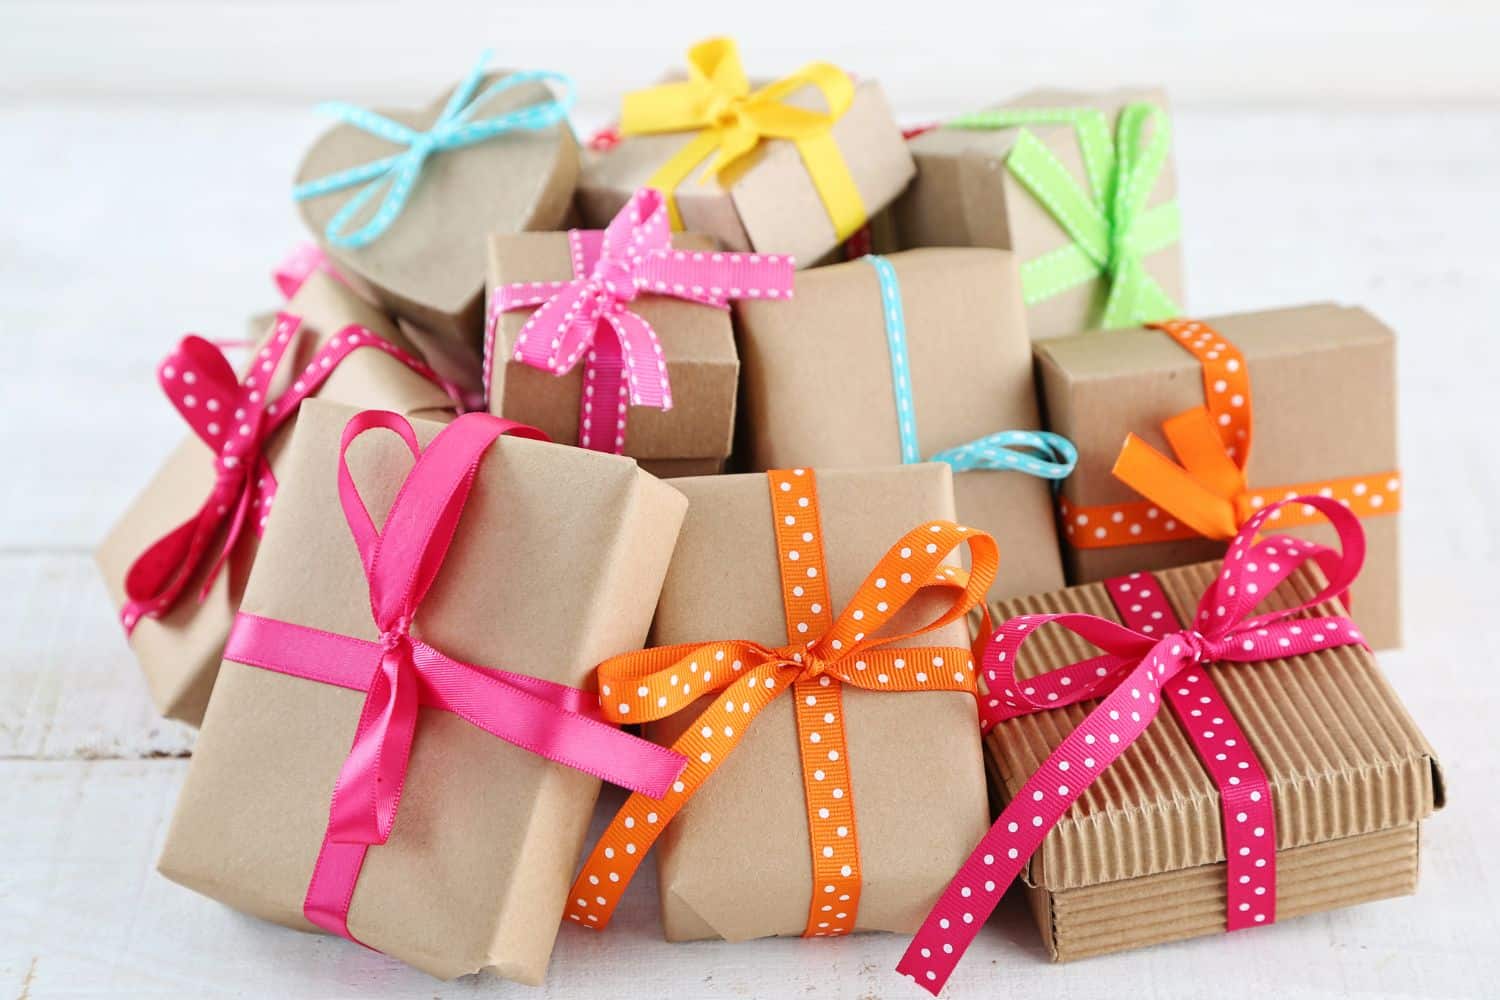 50+ Fun Gift Ideas for Teen Girls